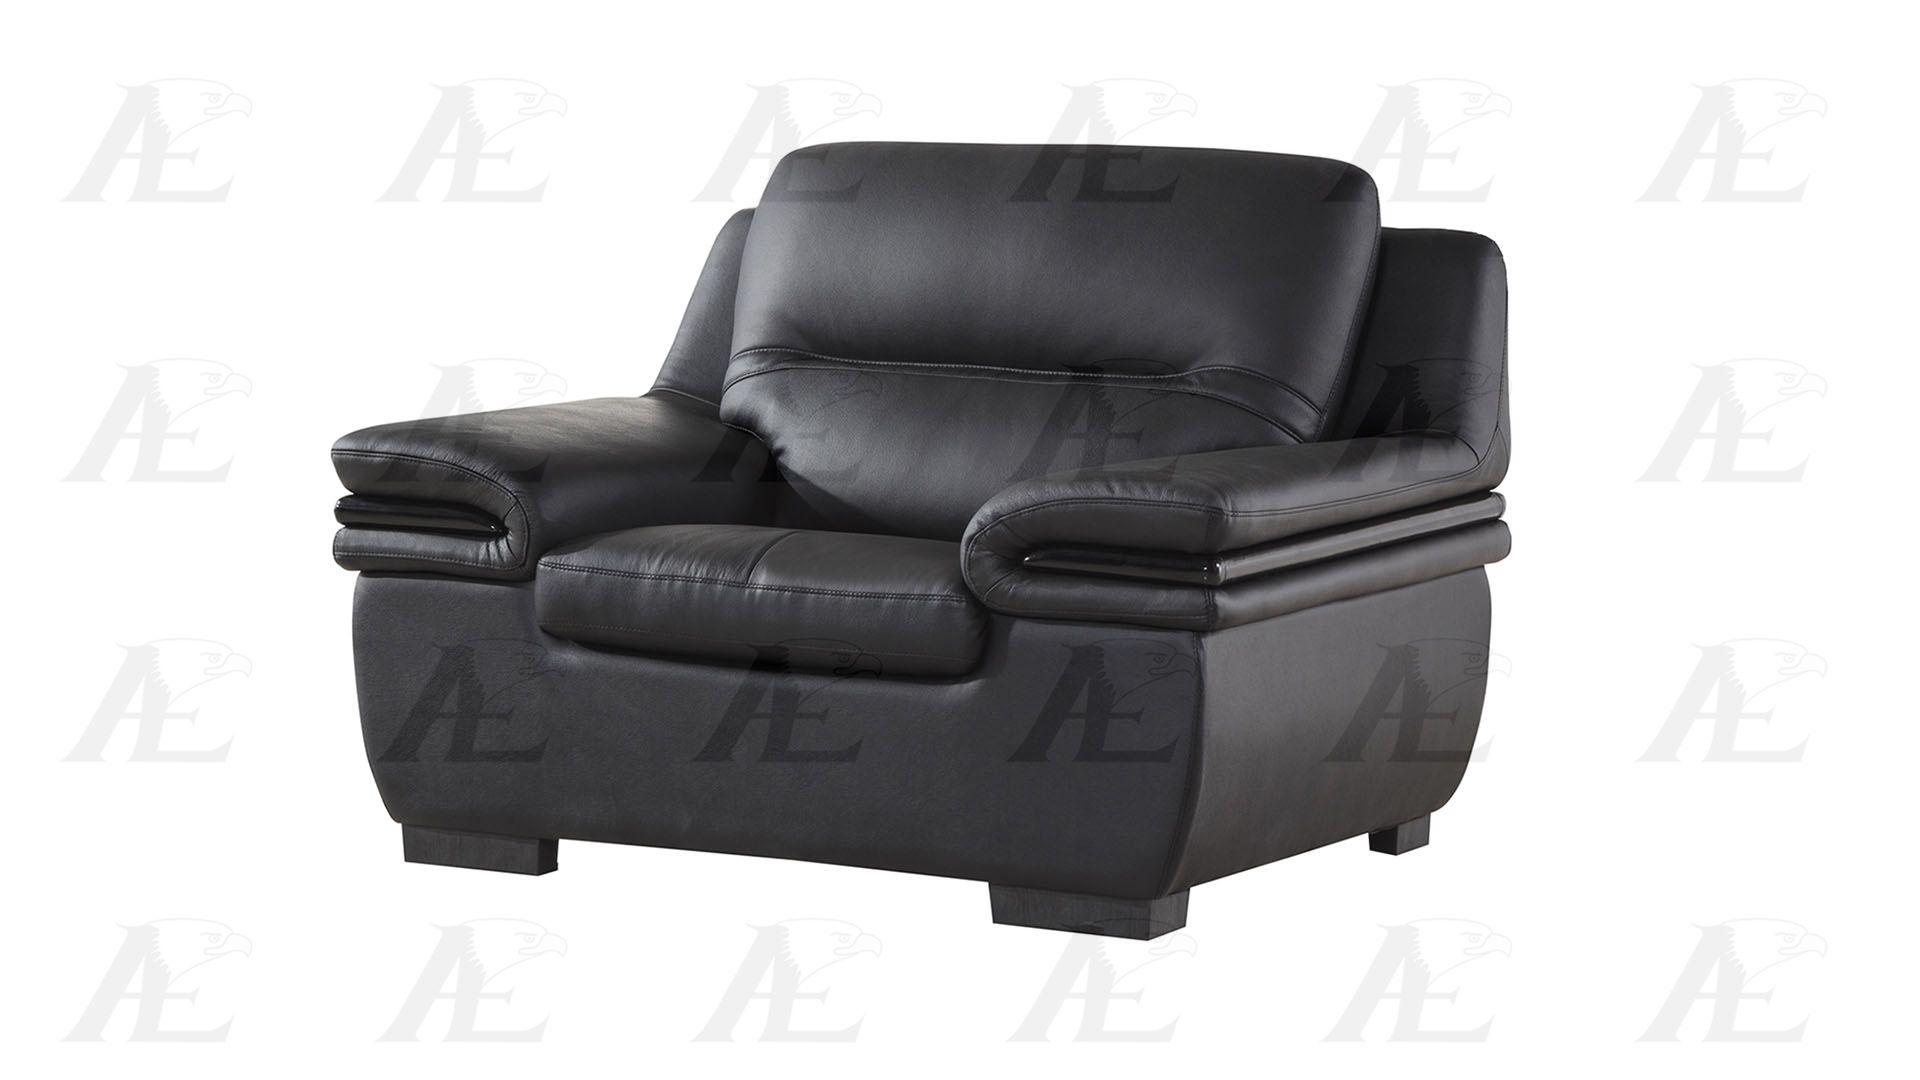 

    
EK-B113-B-SET-3 American Eagle Furniture Sofa Set
